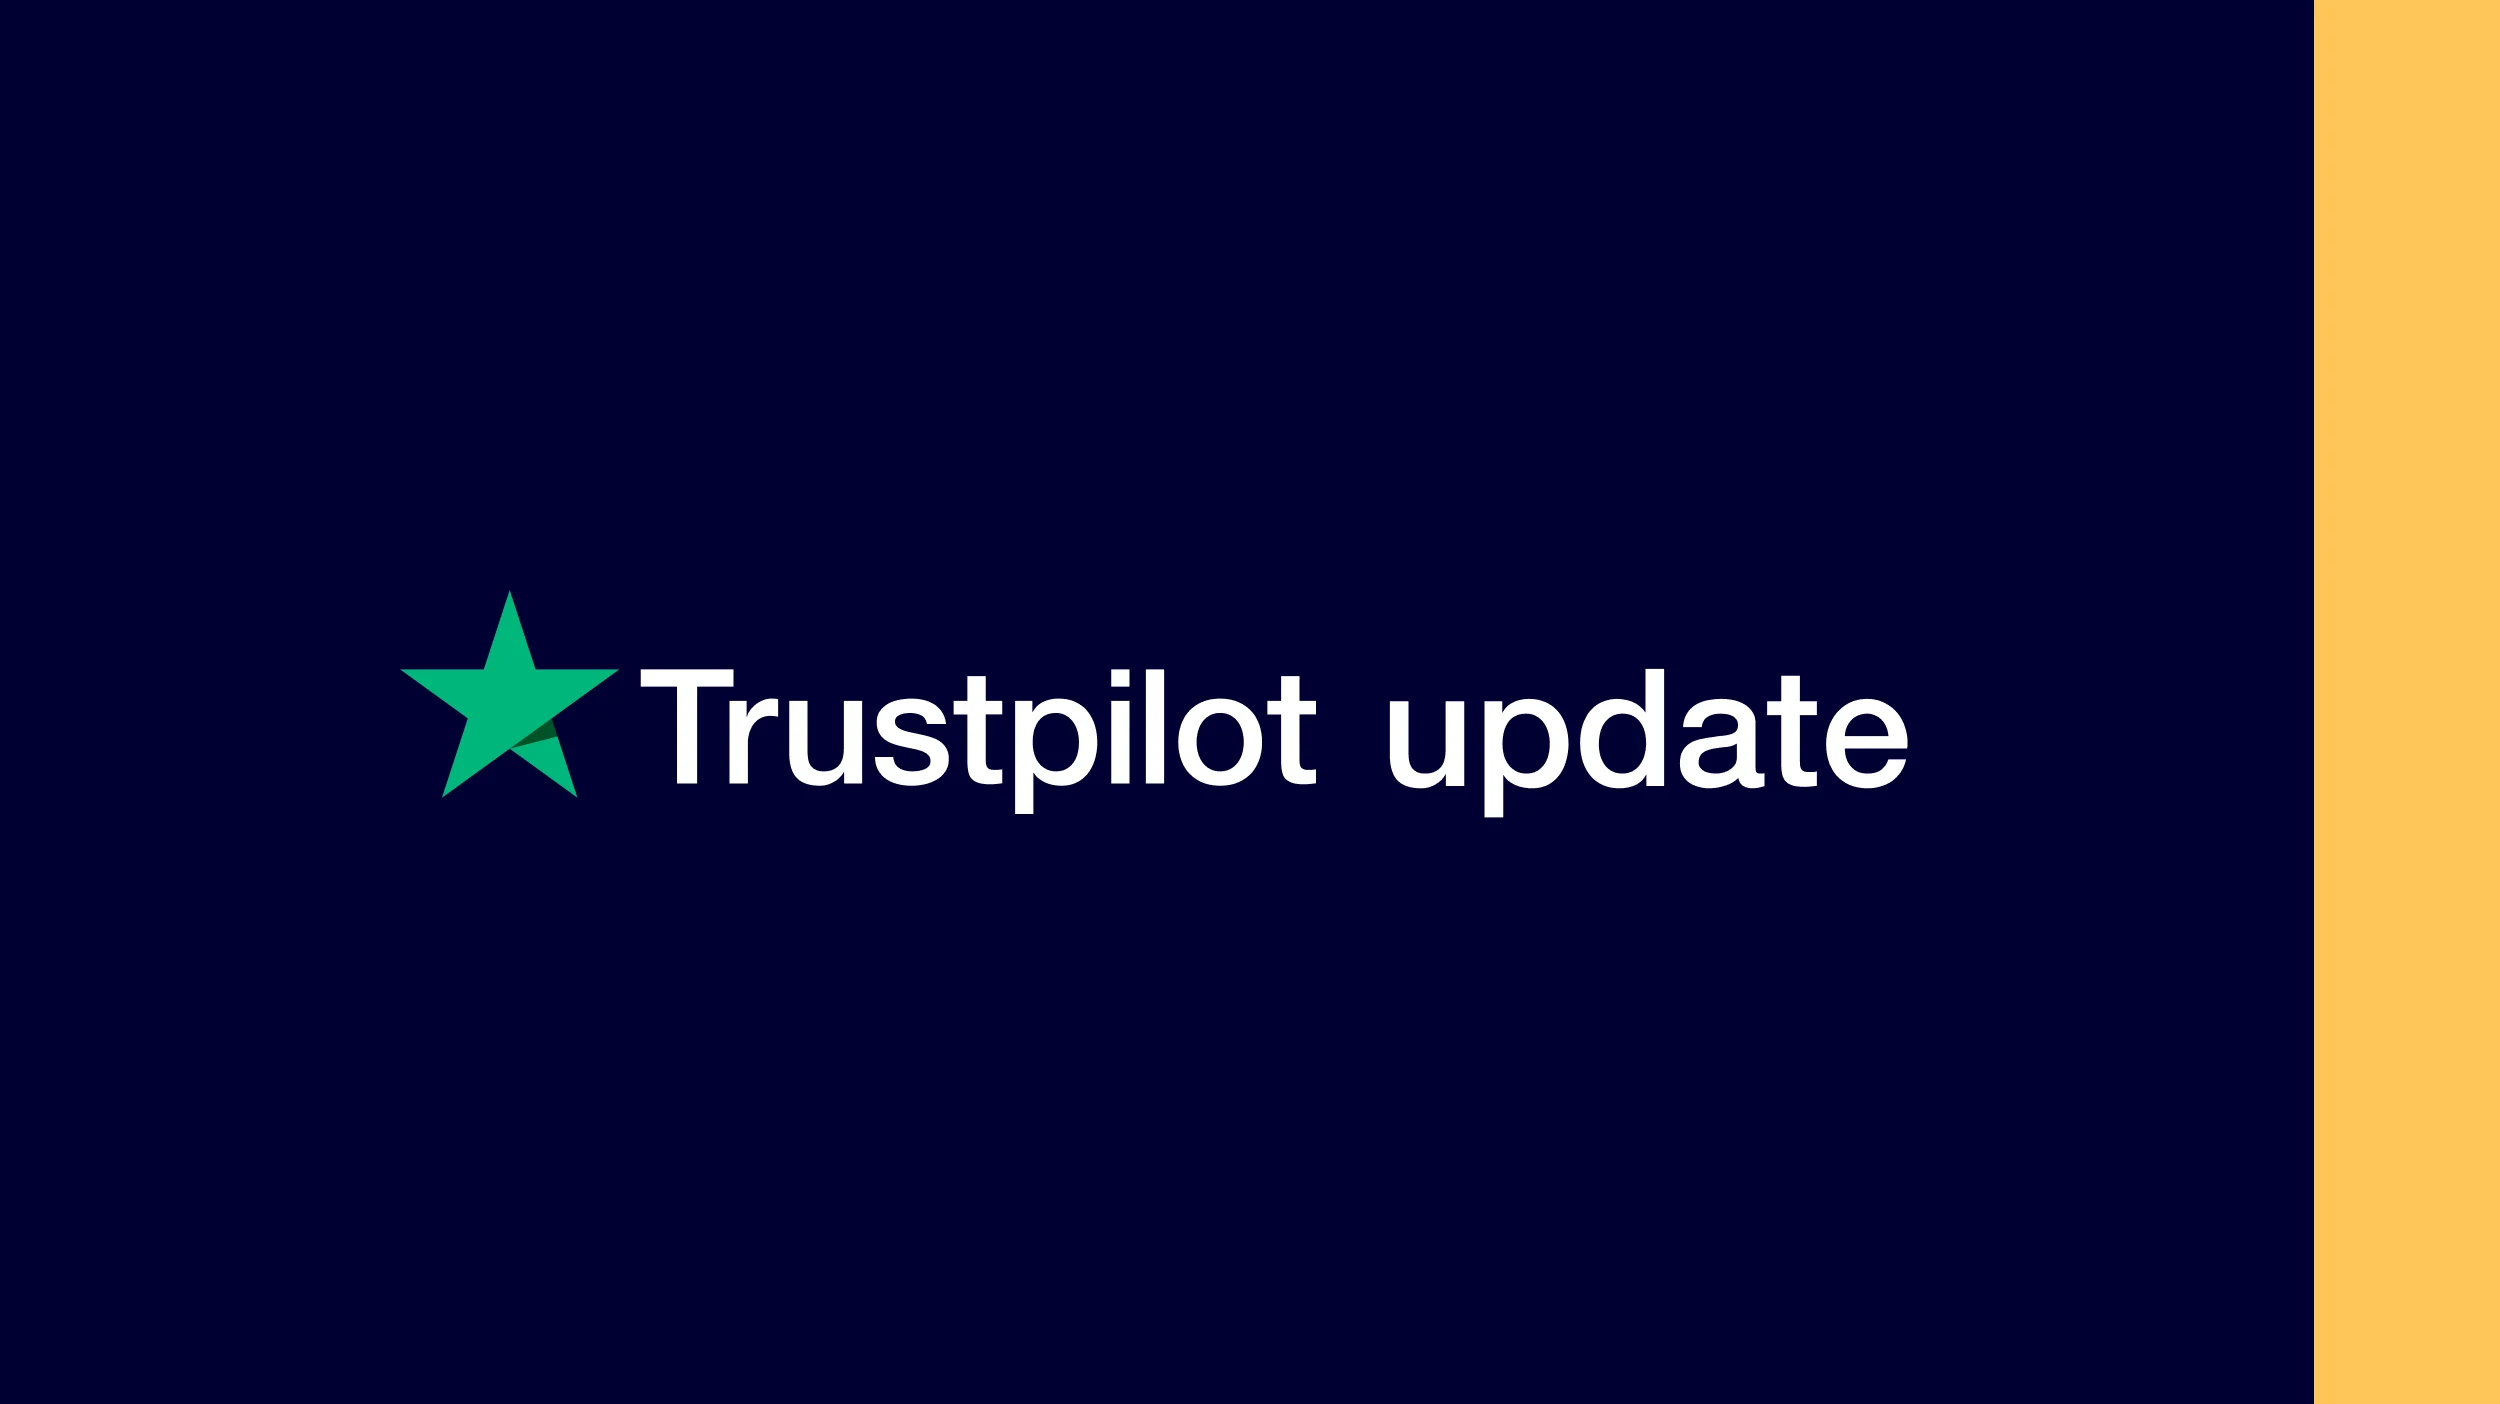 Trustpilot: Our trust promise, June 2020